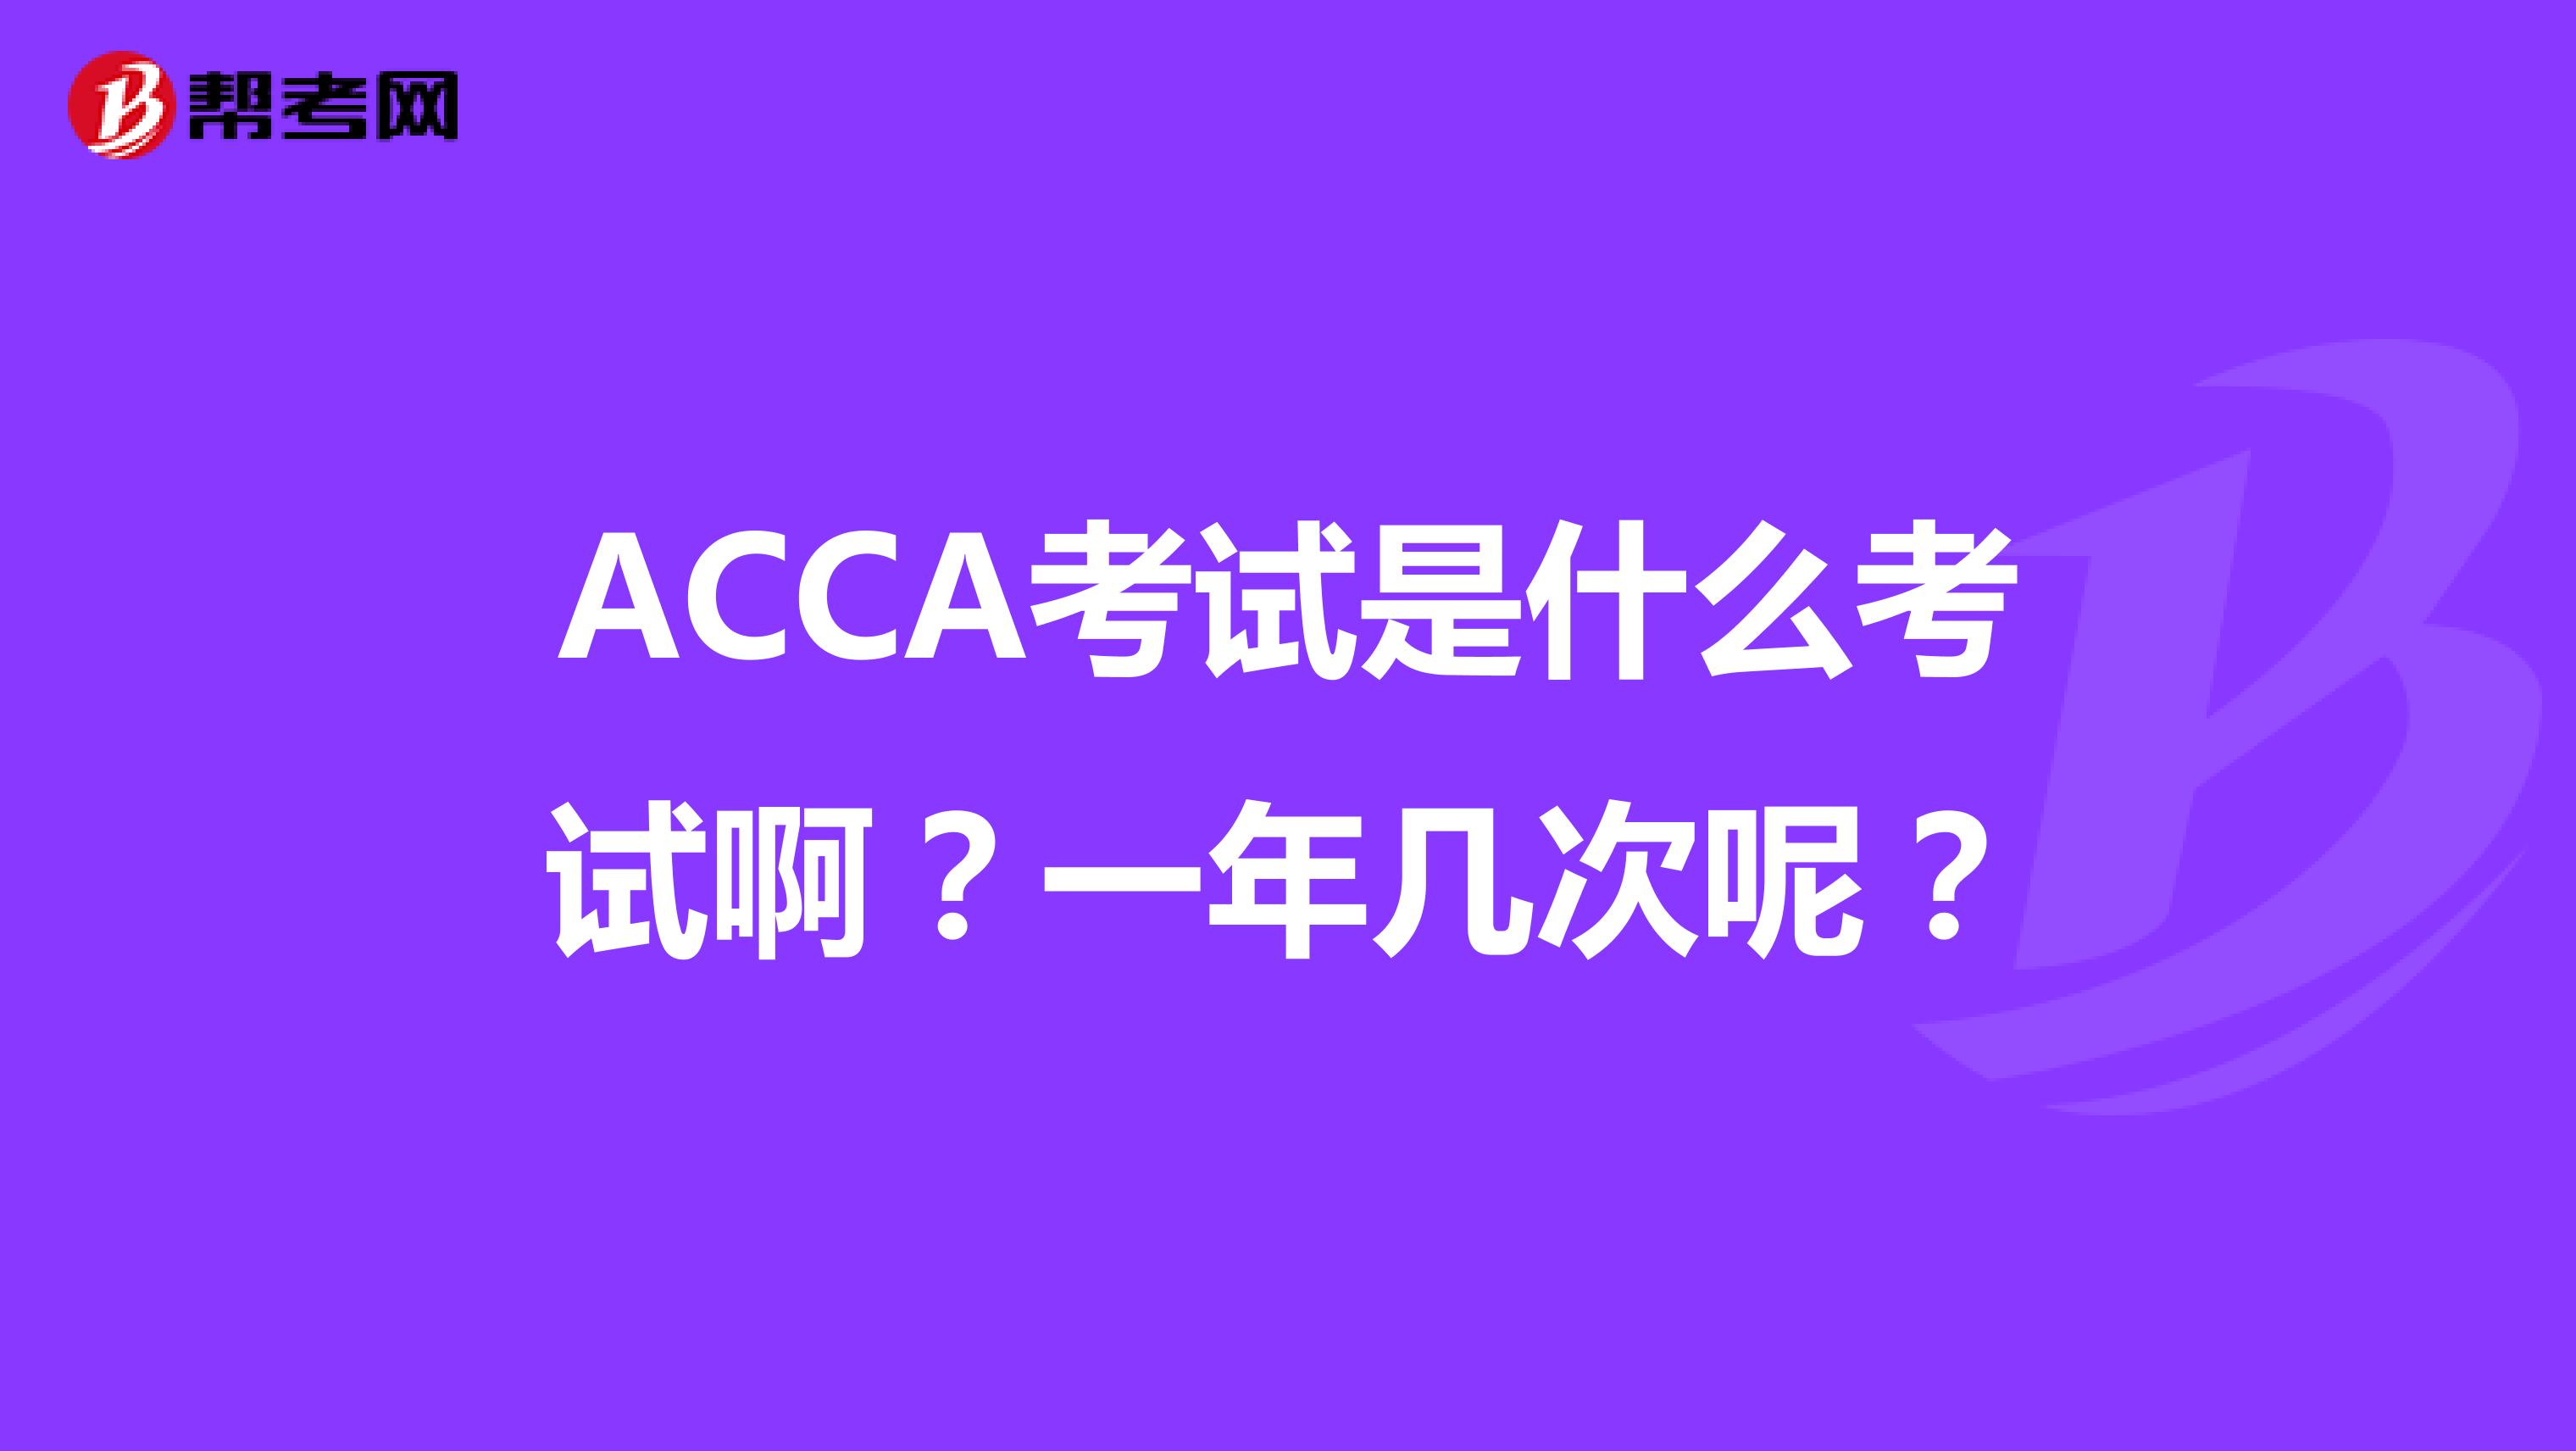 ACCA考试是什么考试啊？一年几次呢？